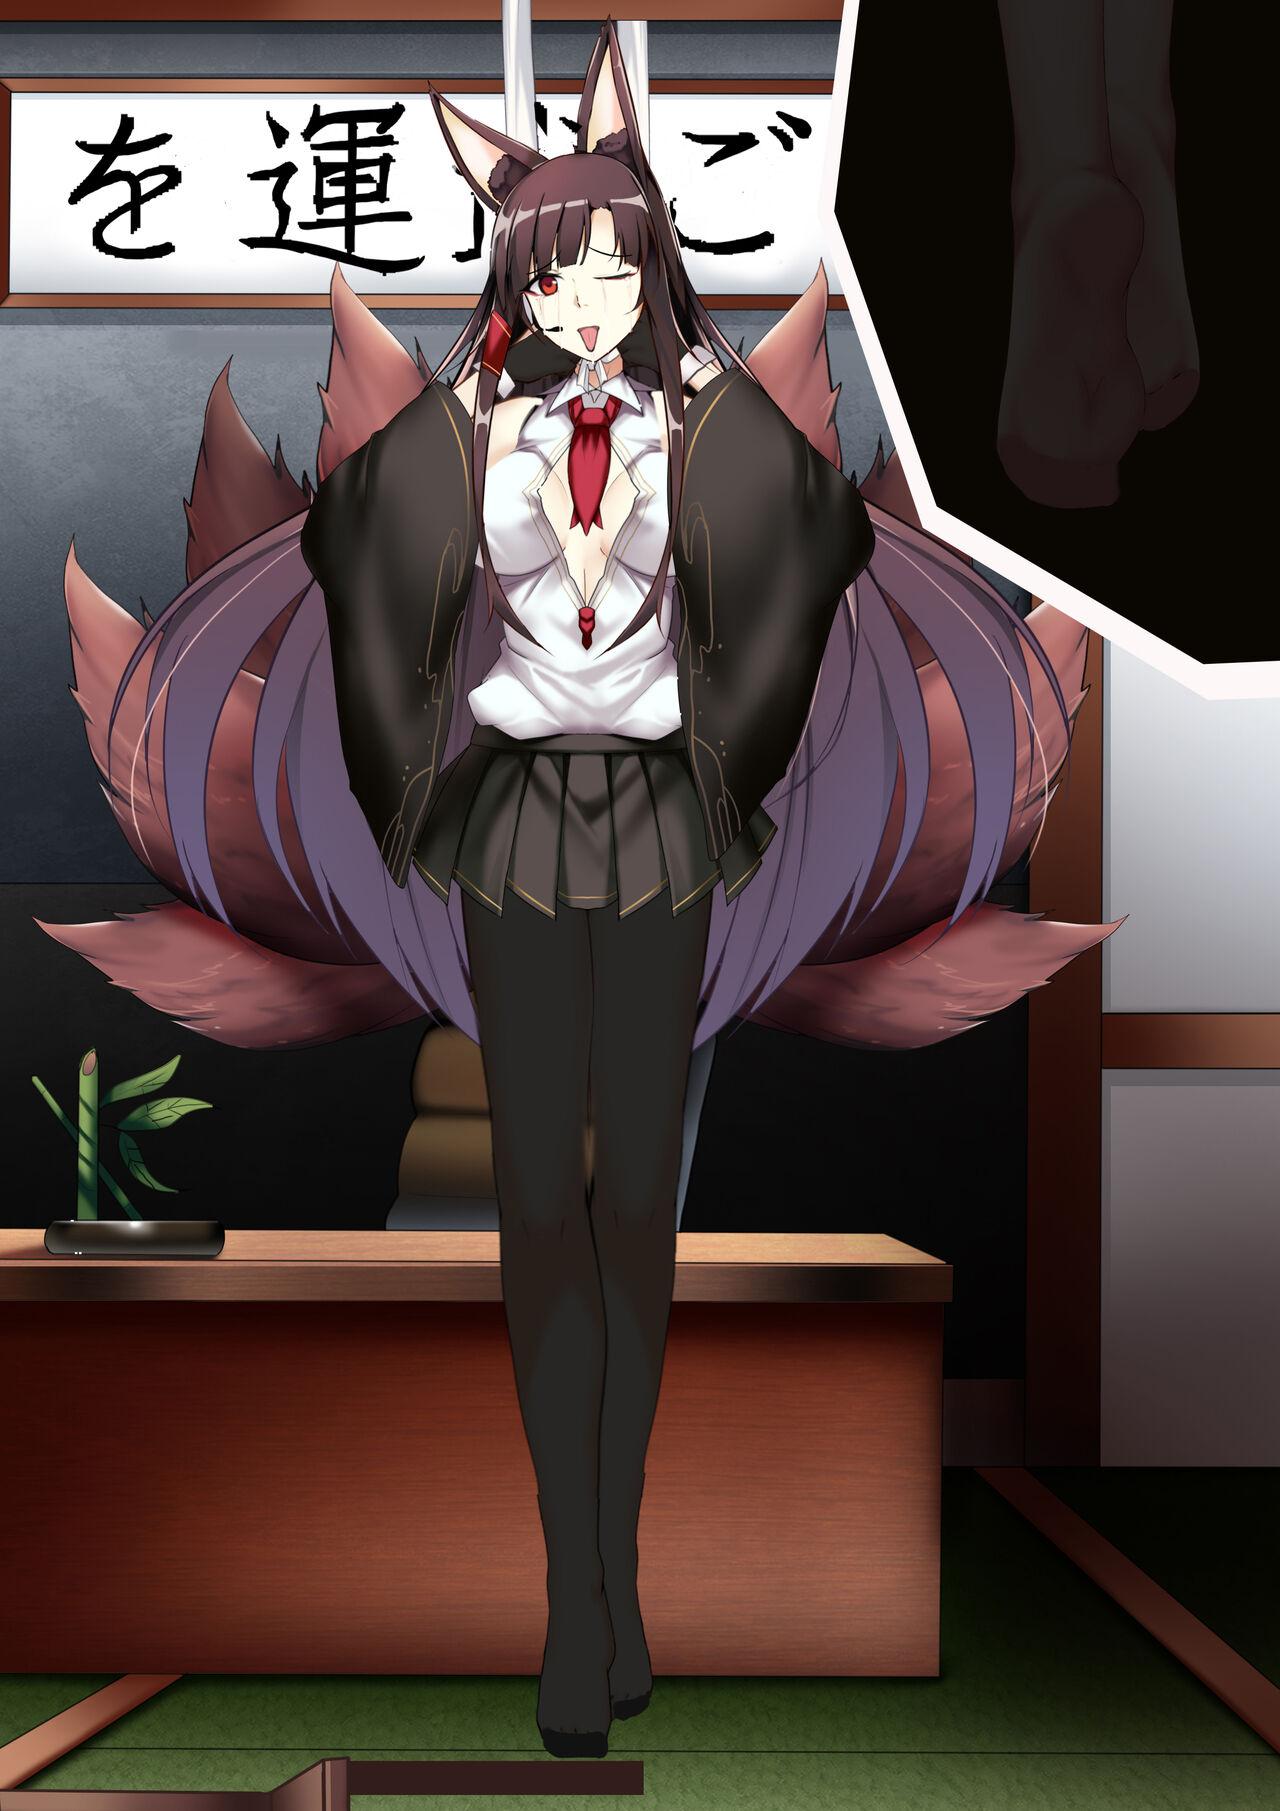 Akagi hanged herself in her office 36